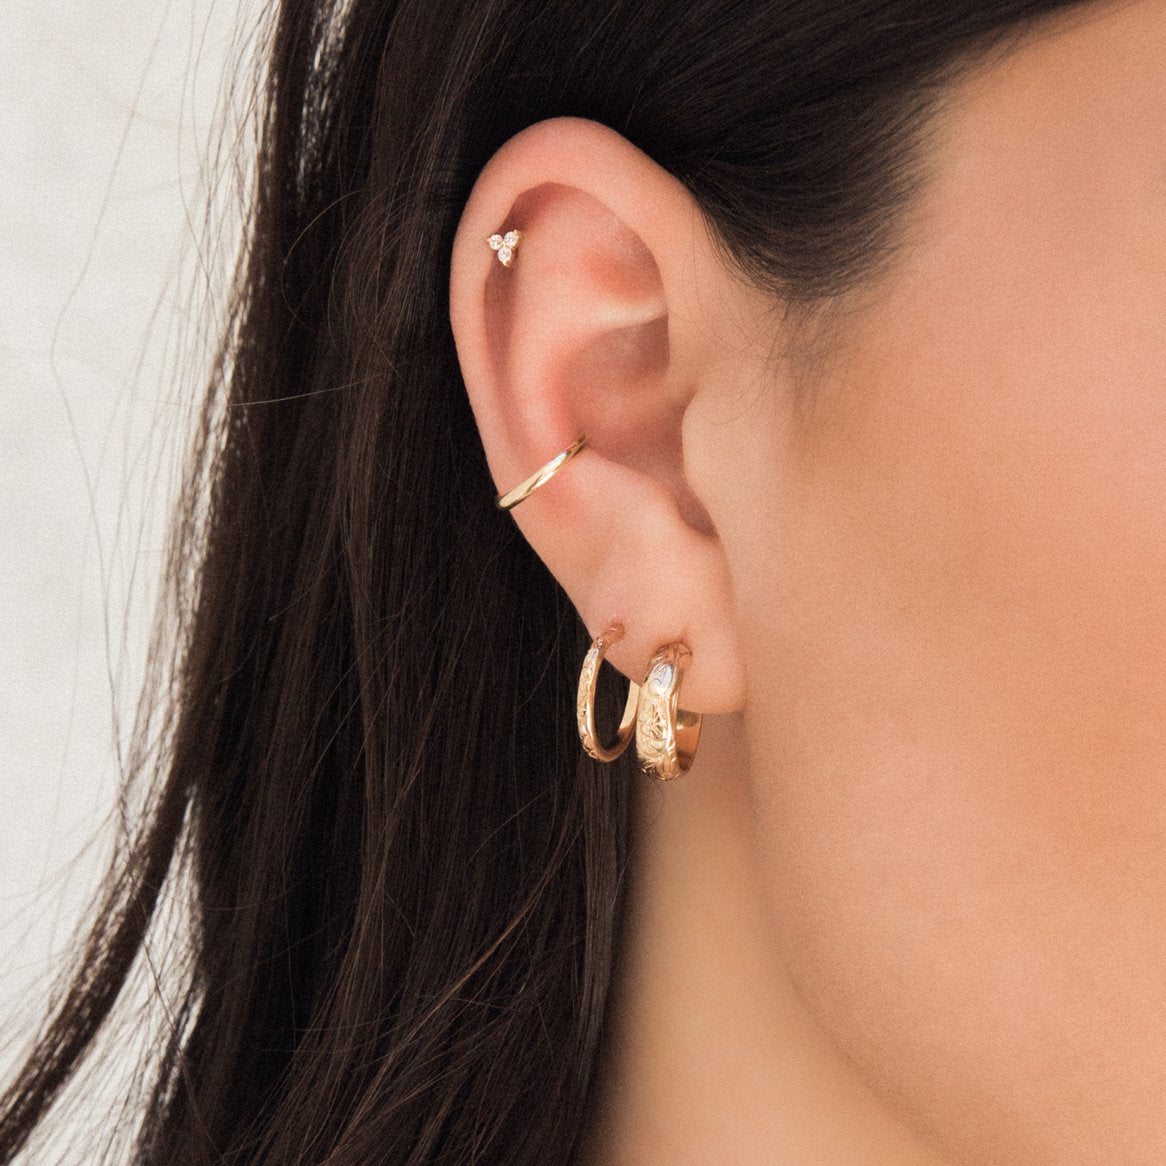 Thick Flower Hoop Earrings by Simple & Dainty Jewelry